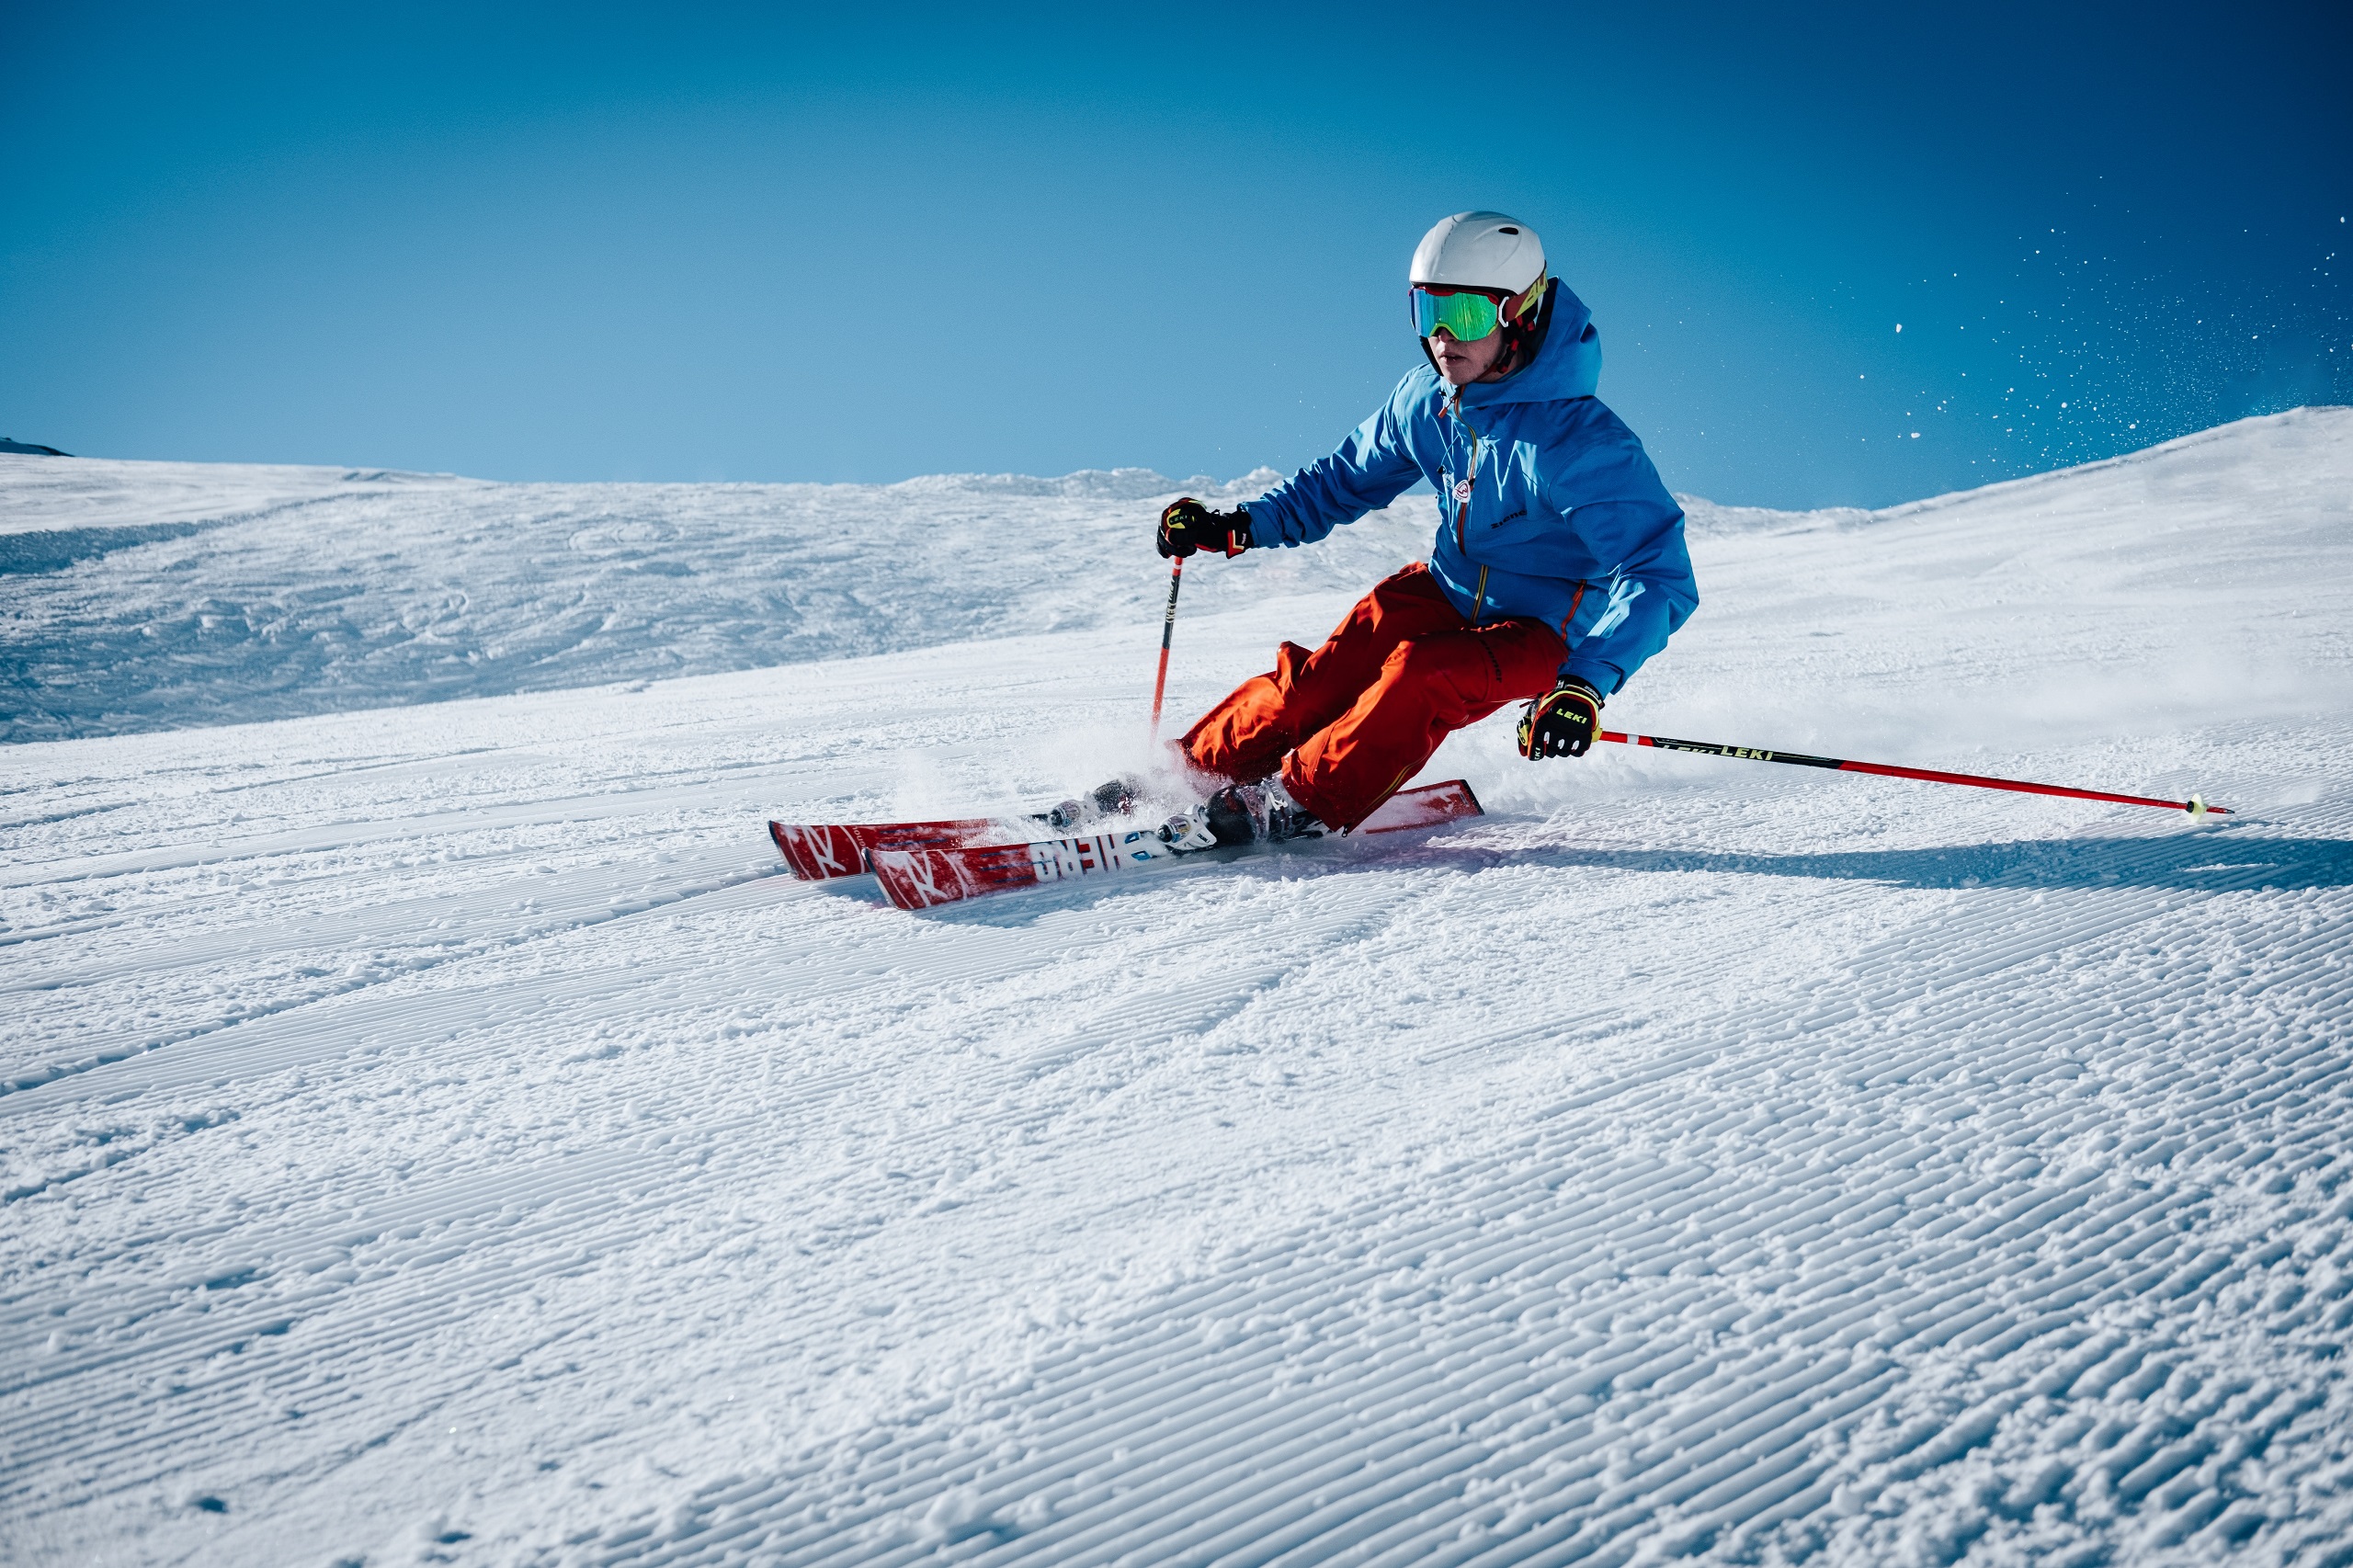 A person skis down a snowy mountain